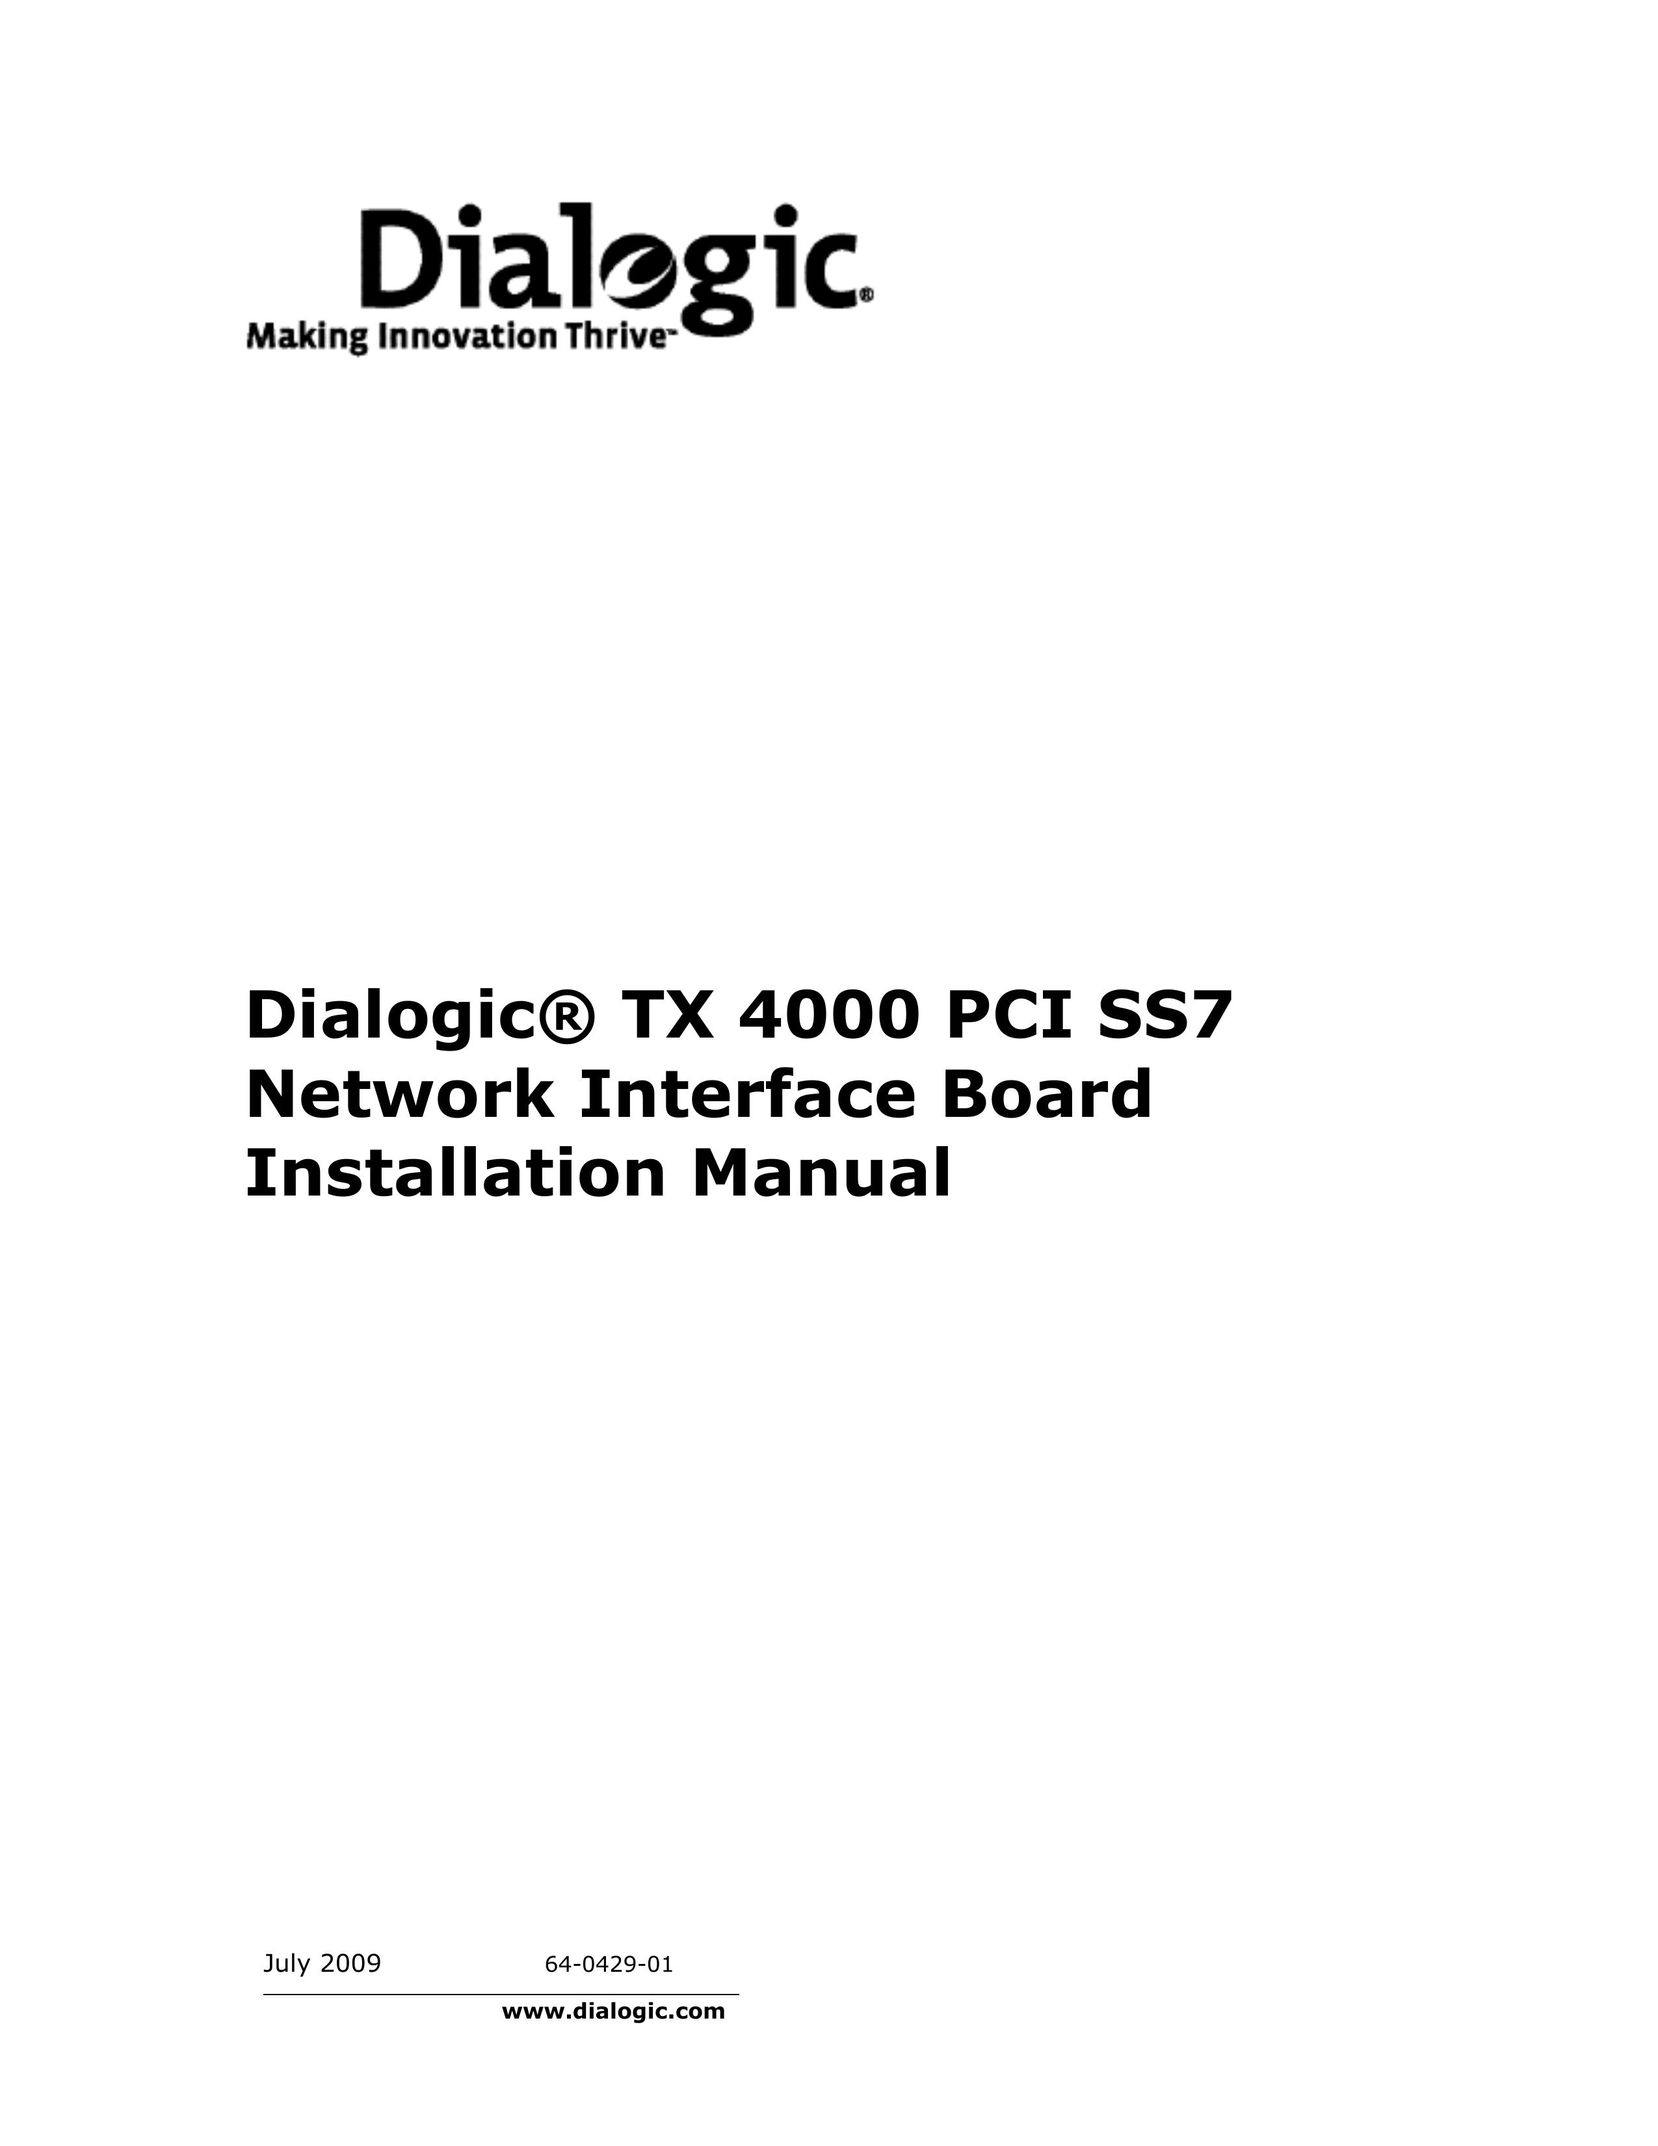 Dialogic TX4000 PCI SS7 Network Card User Manual